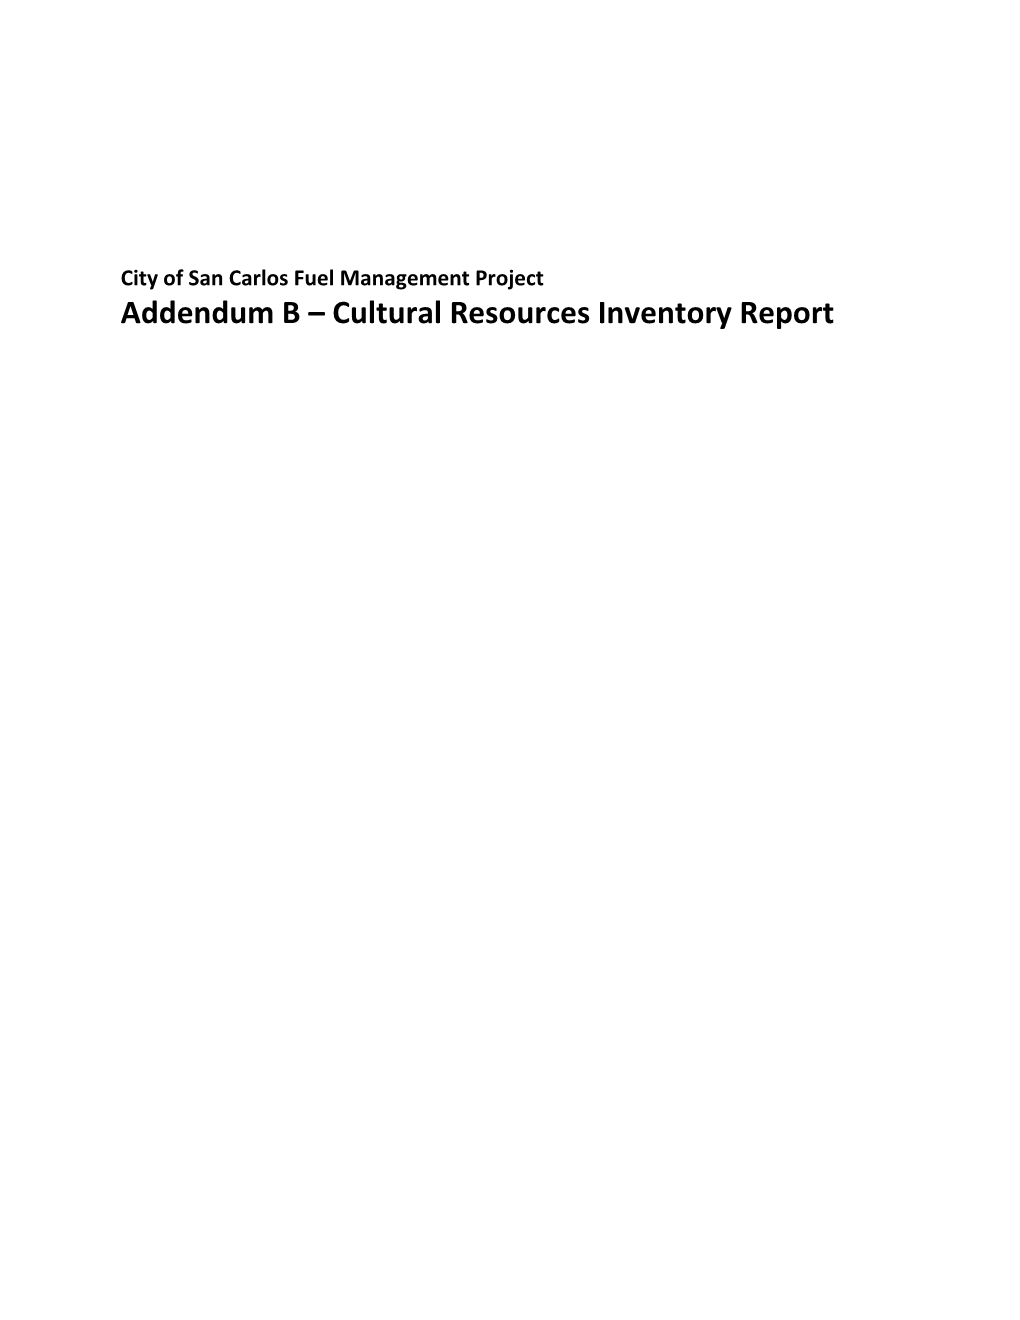 Addendum B – Cultural Resources Inventory Report